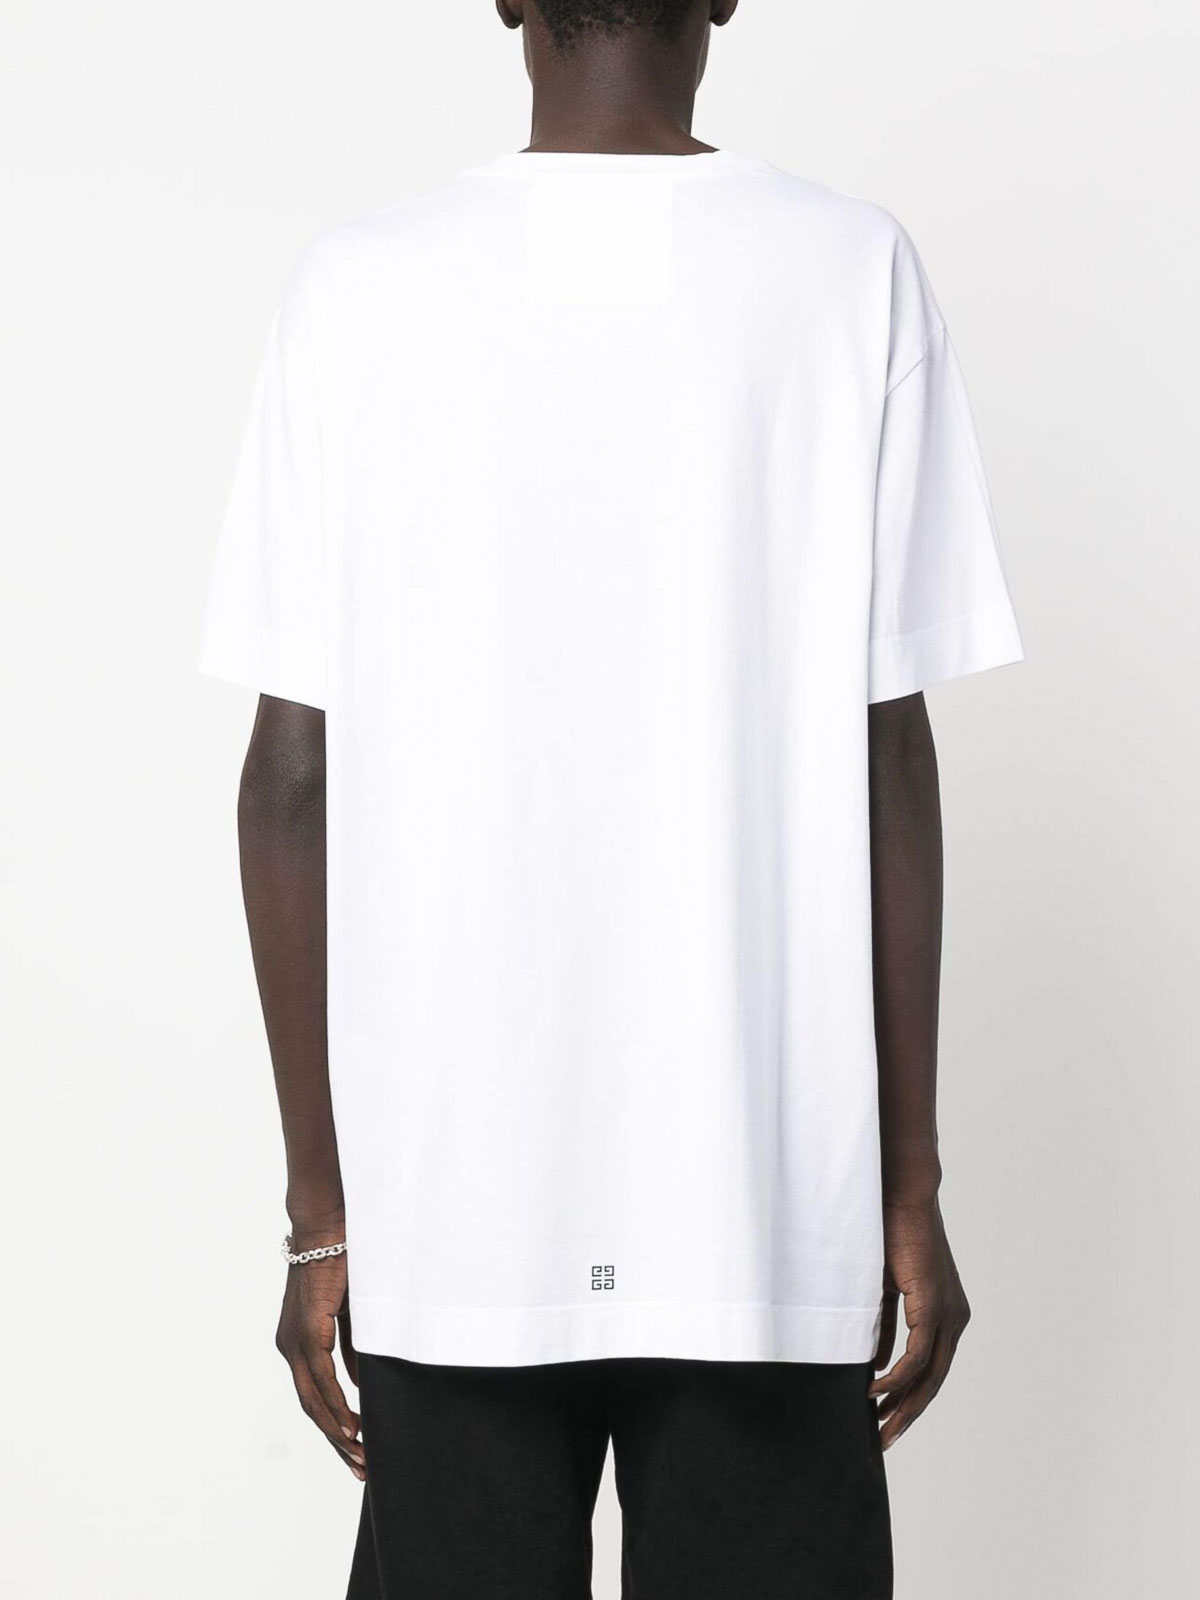 Shop Givenchy Camiseta - Blanco In White